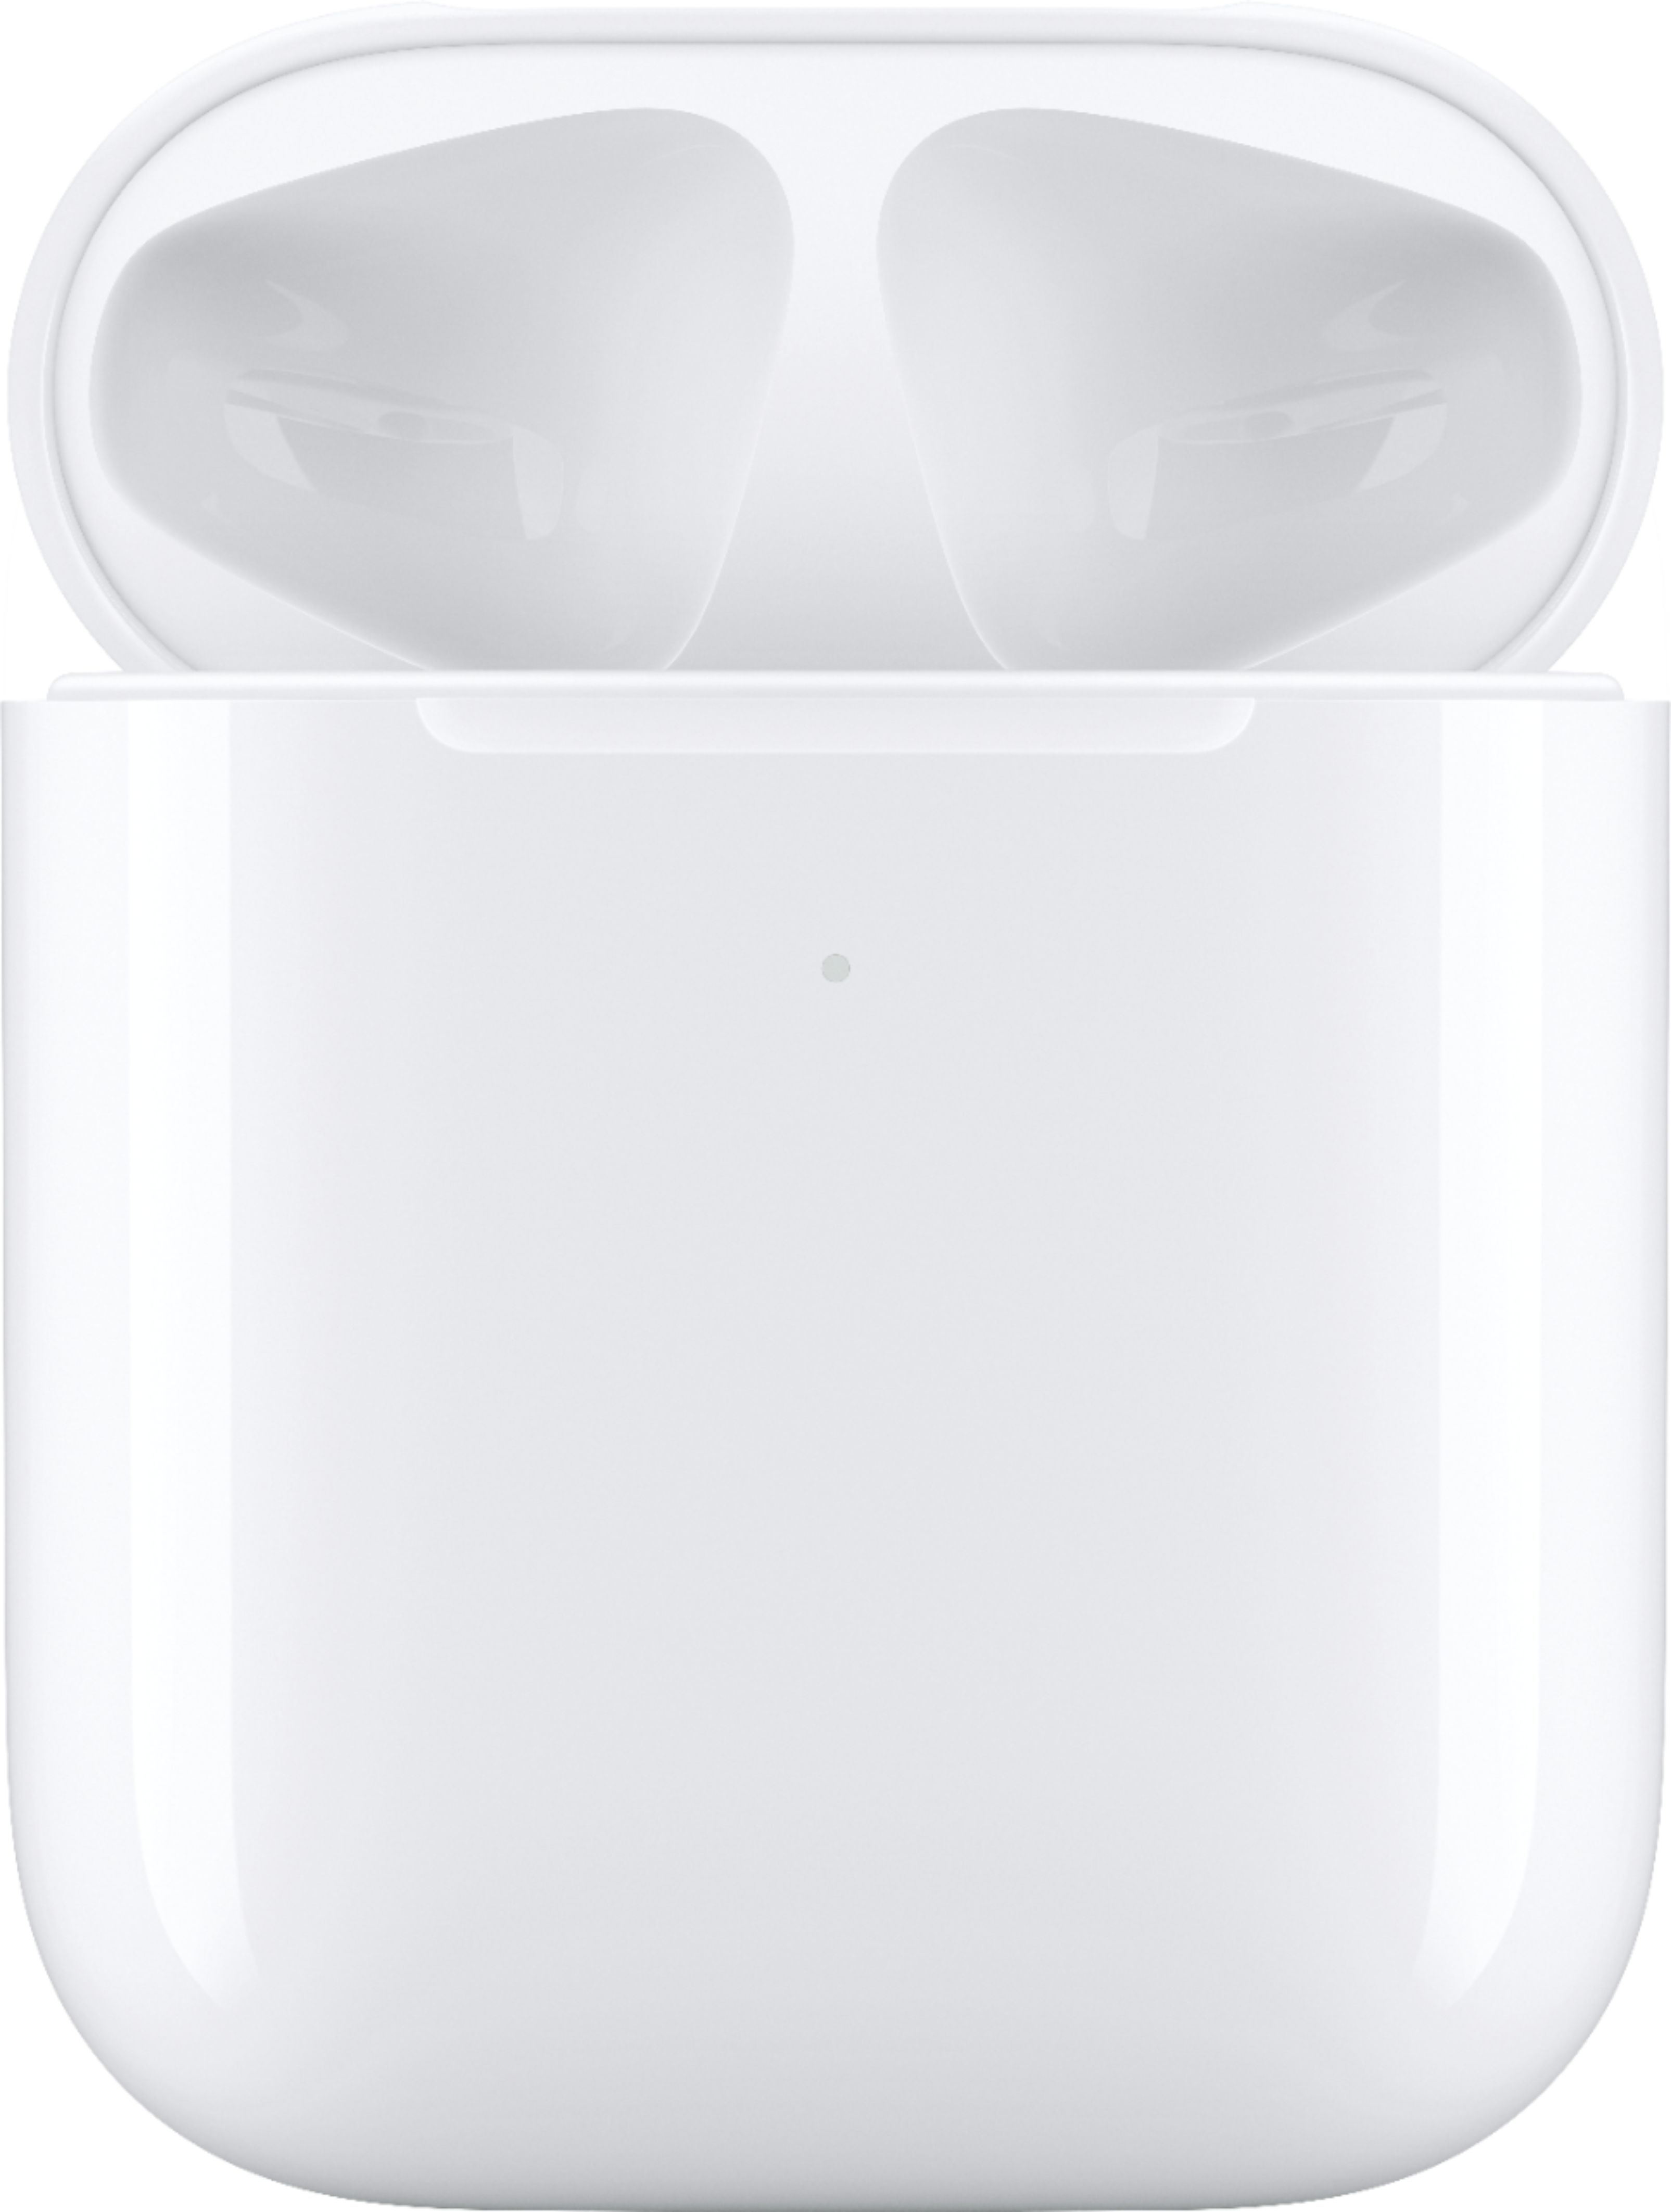 Apple AirPods Wireless Charging Case White MR8U2AM/A - Best Buy